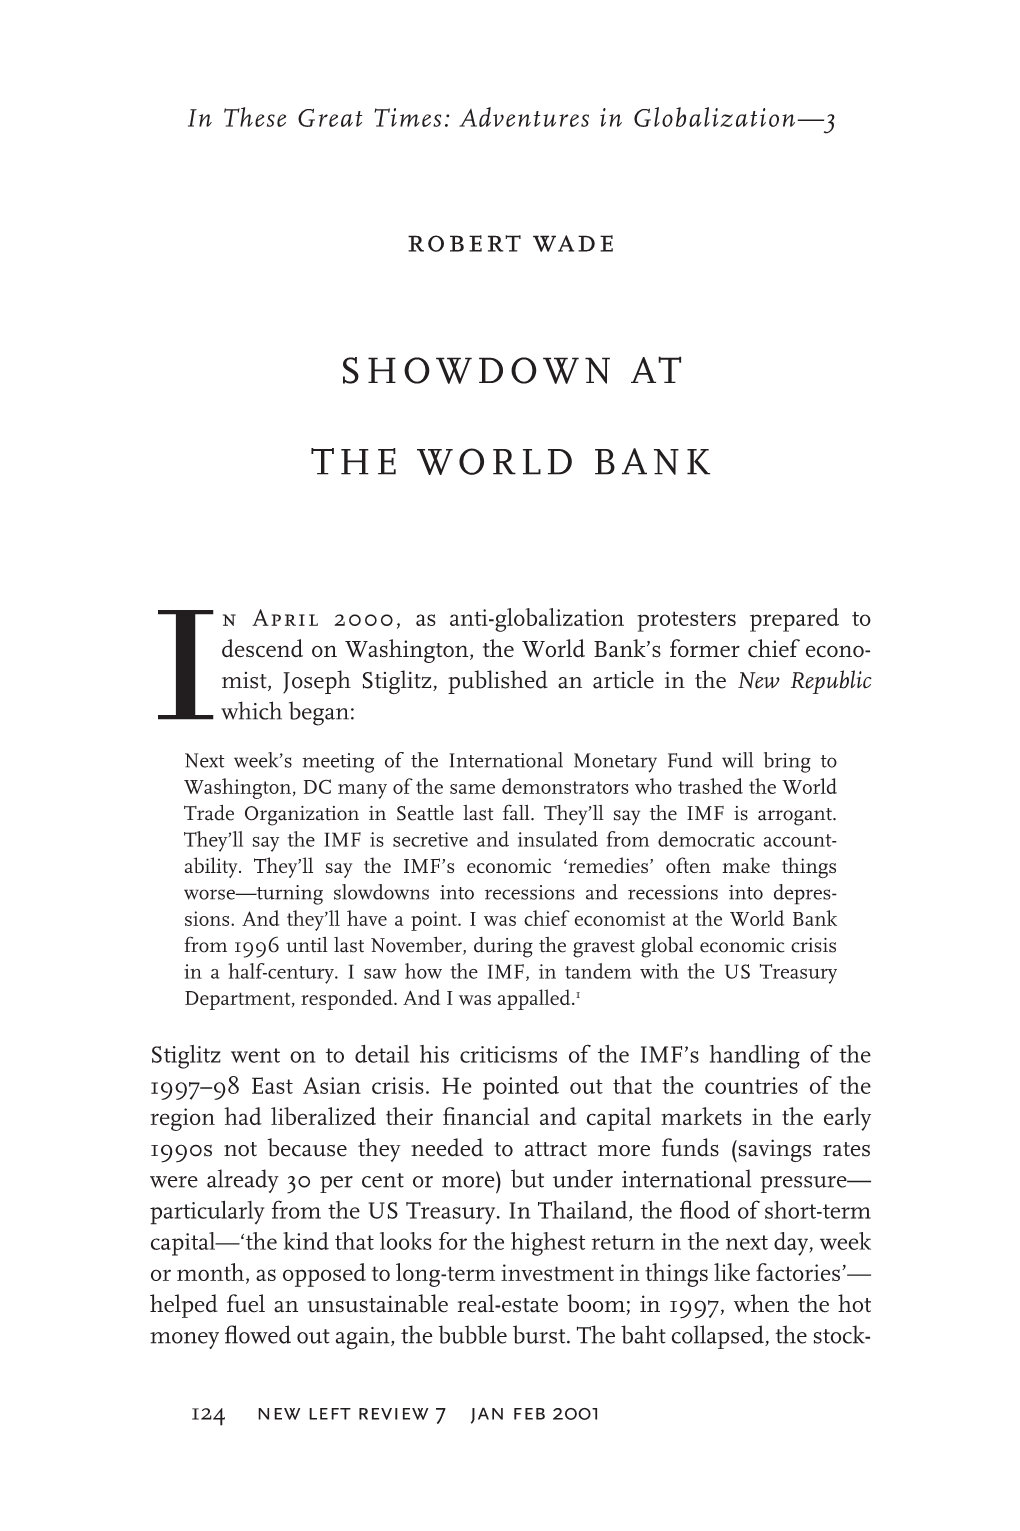 Showdown at the World Bank